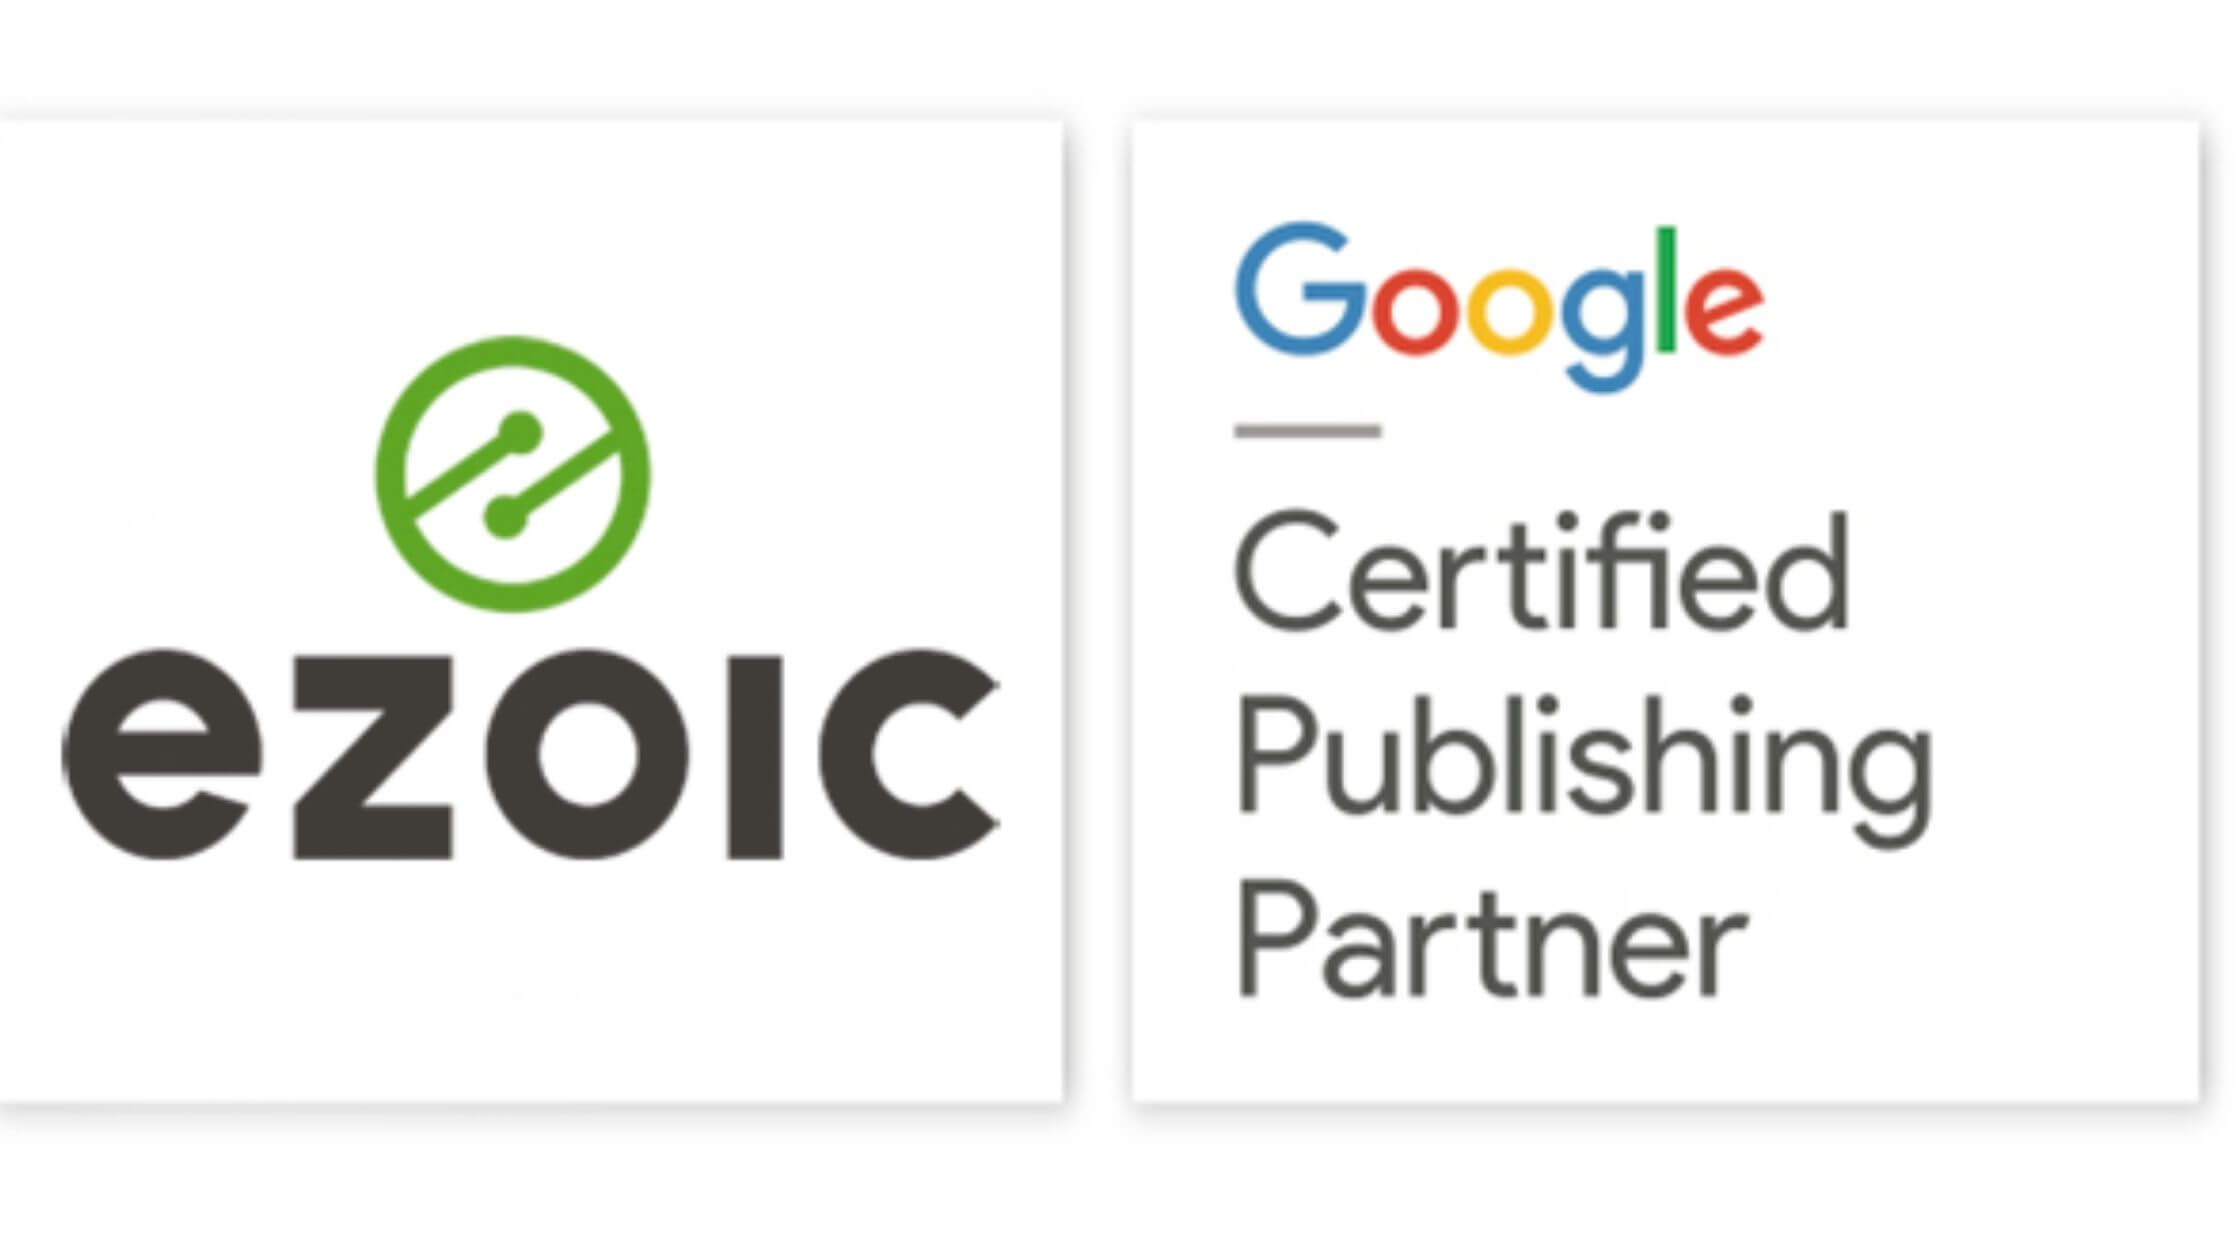 Ezoic Google Certified publishing partner